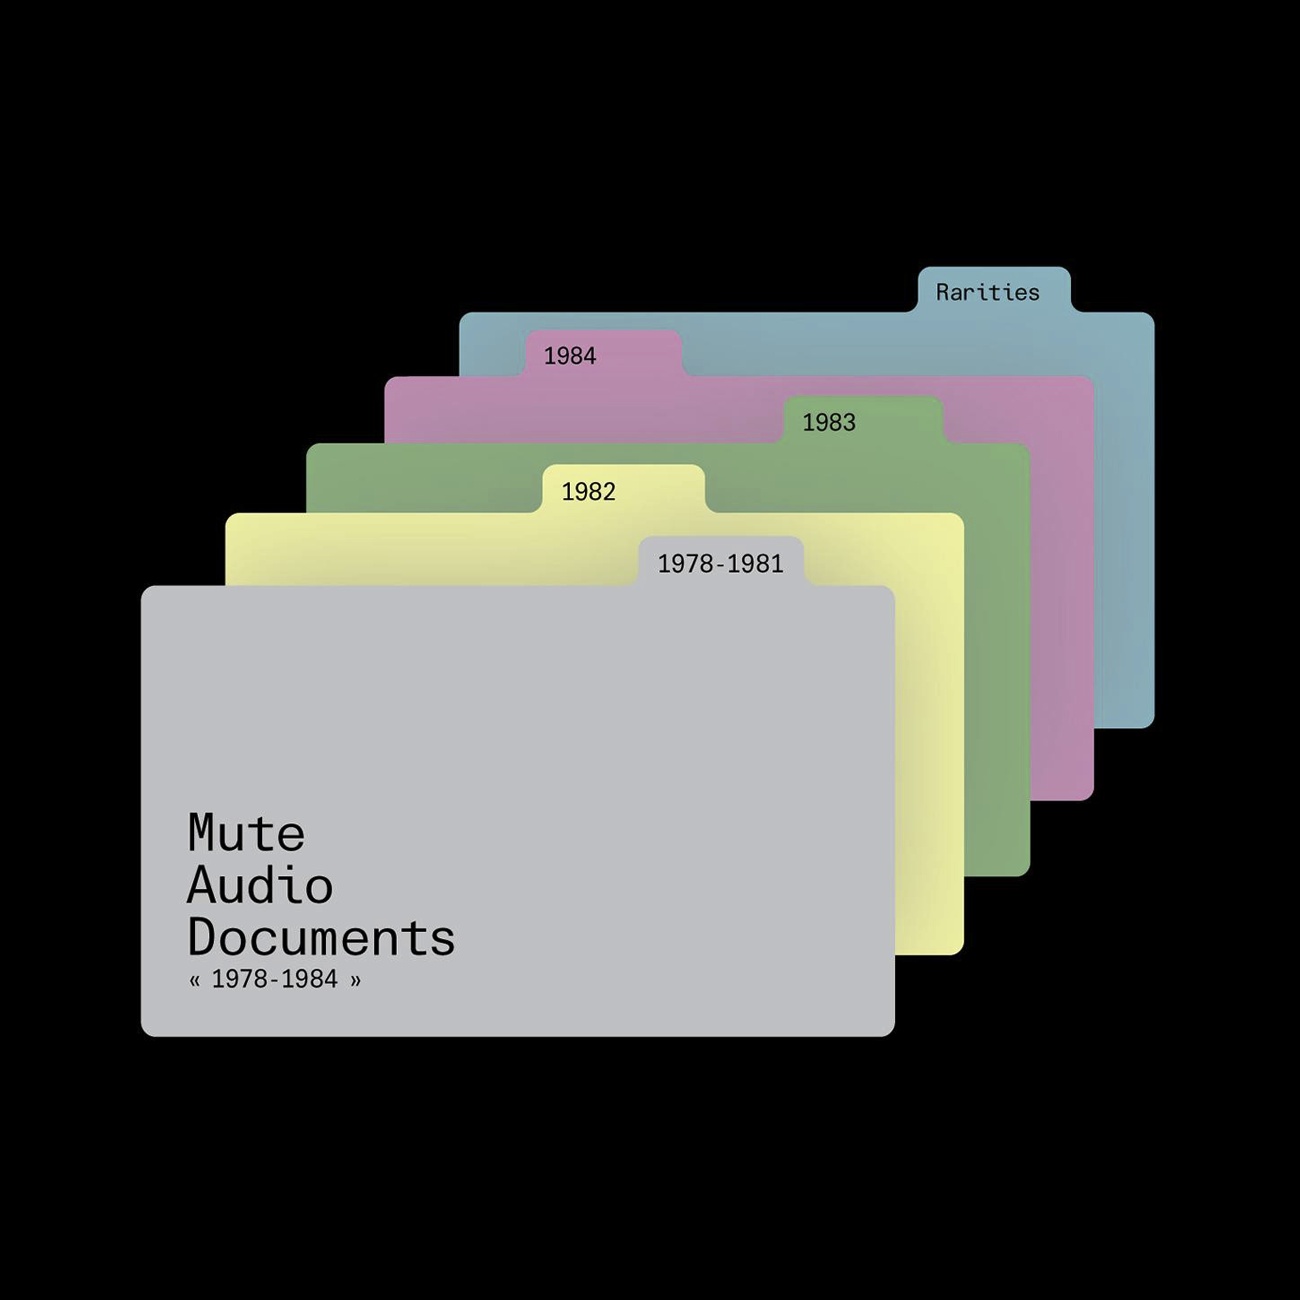 Mute: Audio Documents